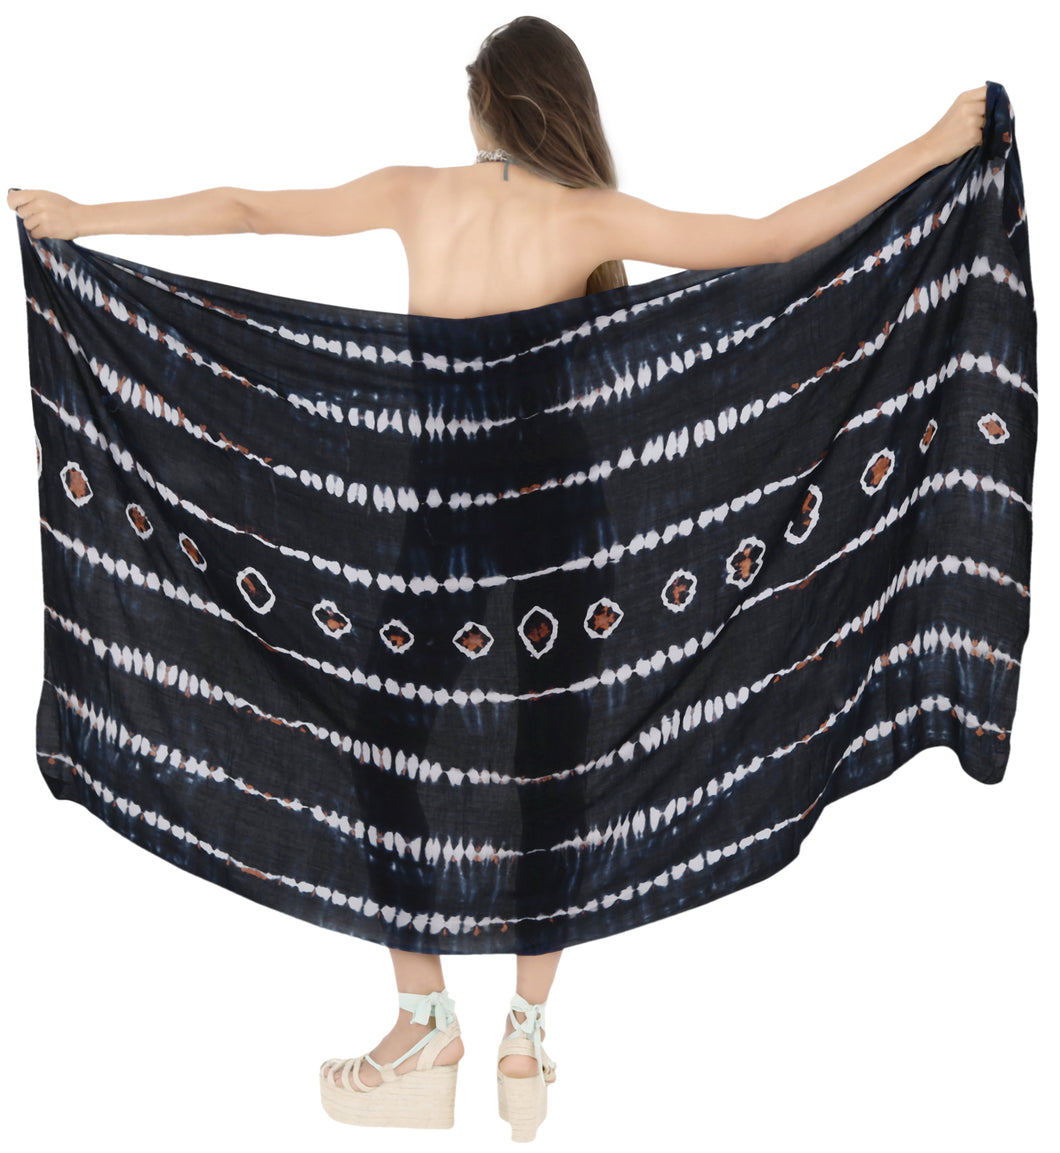 la-leela-bathing-towel-beachwear-womens-sarong-bikini-cover-up-Tie-Dye-printed